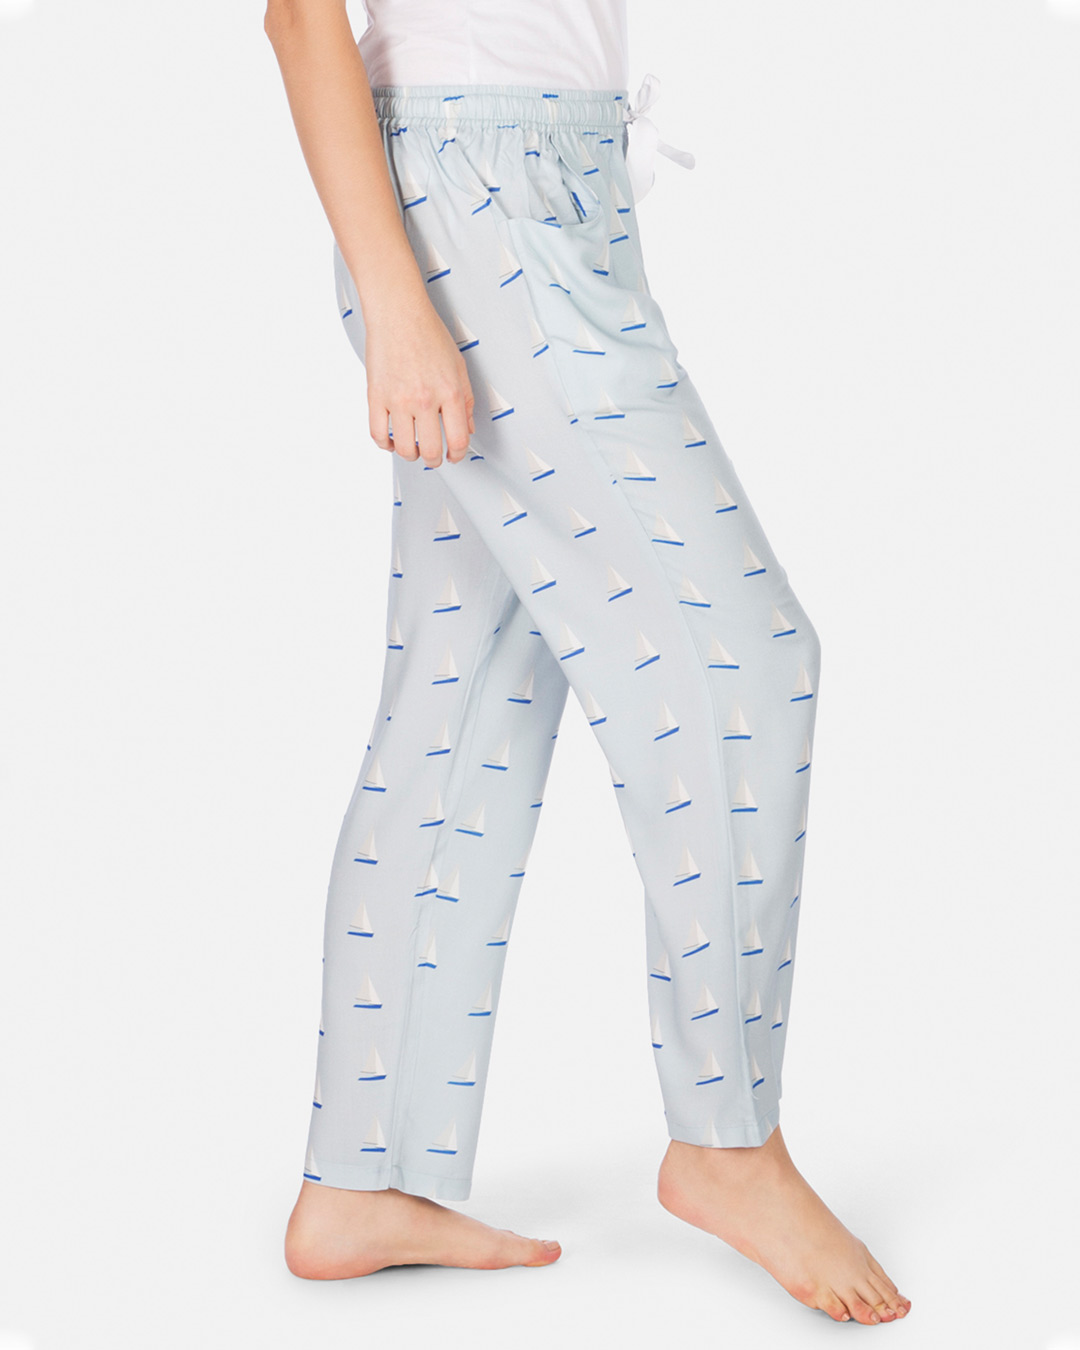 Shop Women's Pyjamas Sailboat Blue-Back